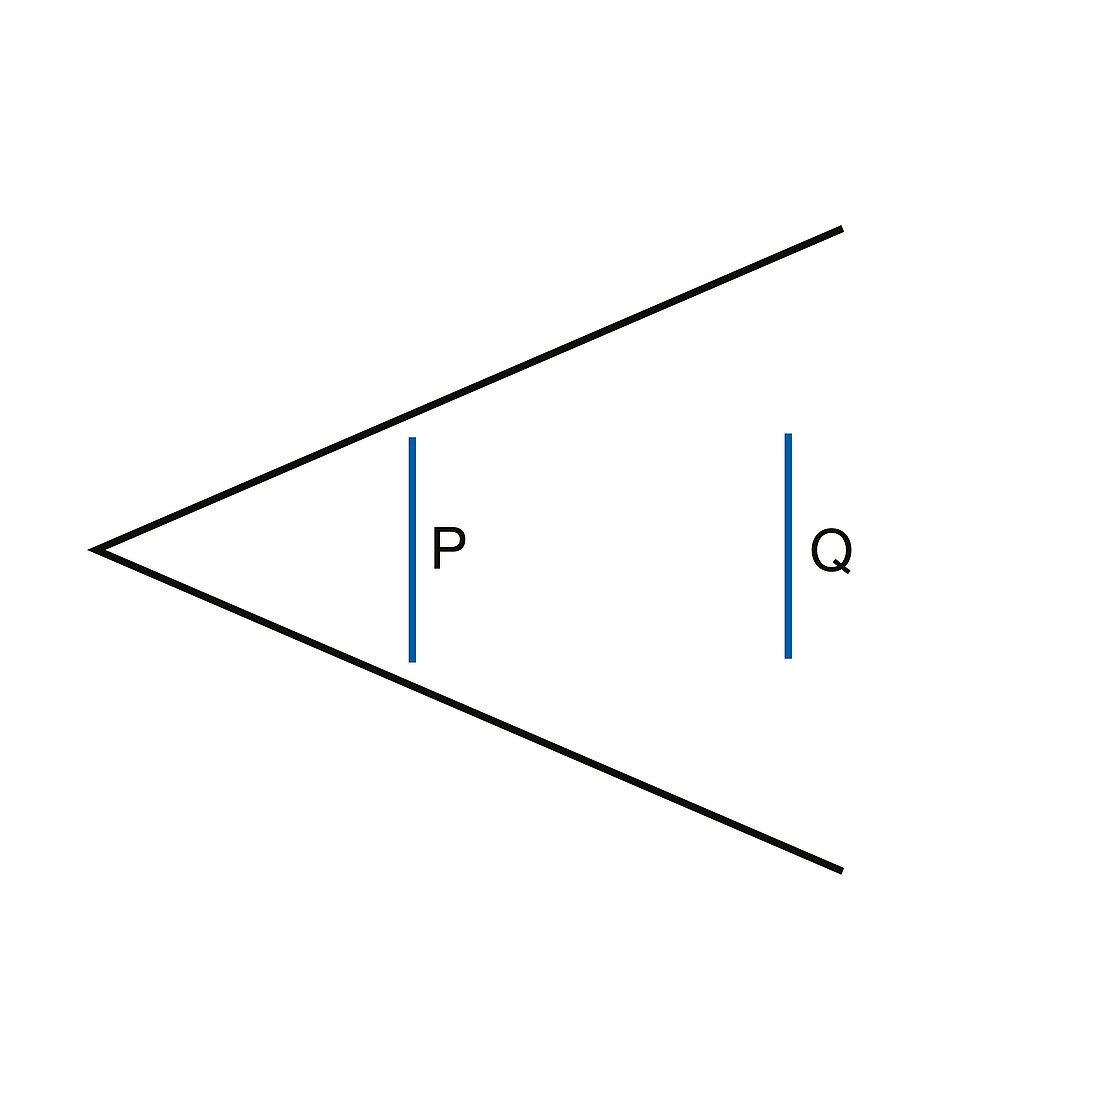 Ponzo's optical illusion, illustration